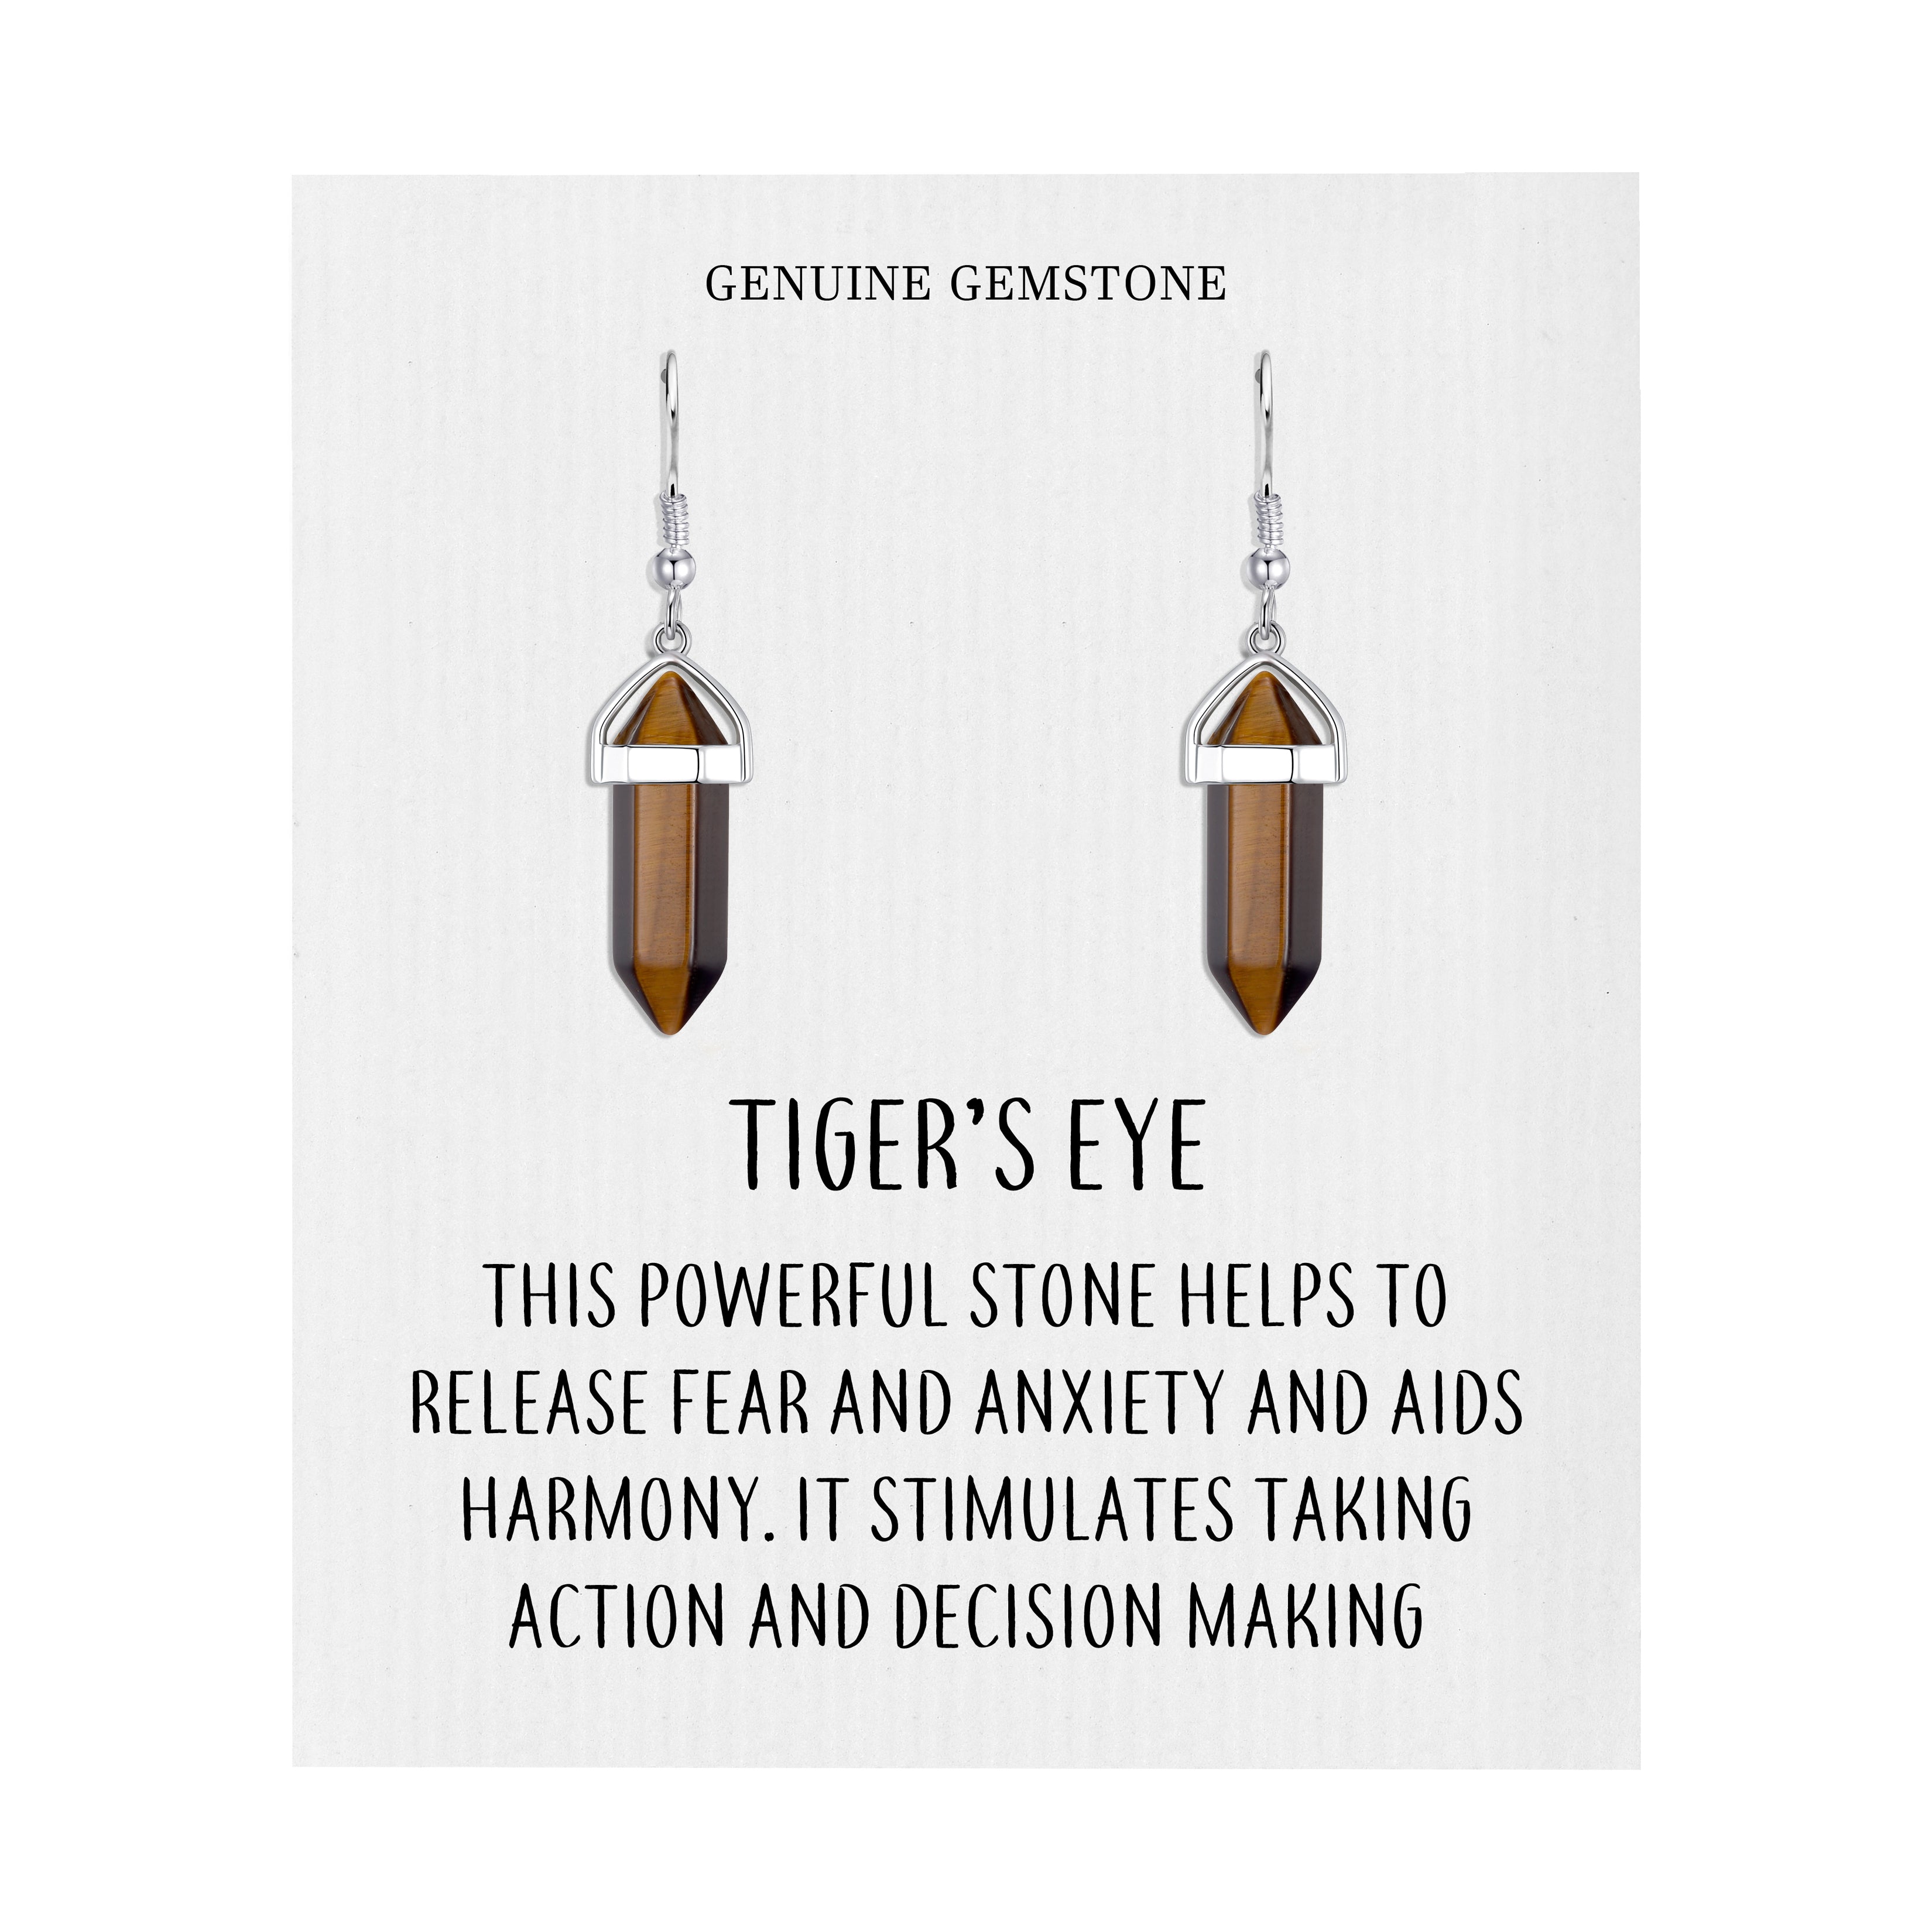 Tiger's Eye Gemstone Drop Earrings with Quote Card by Philip Jones Jewellery